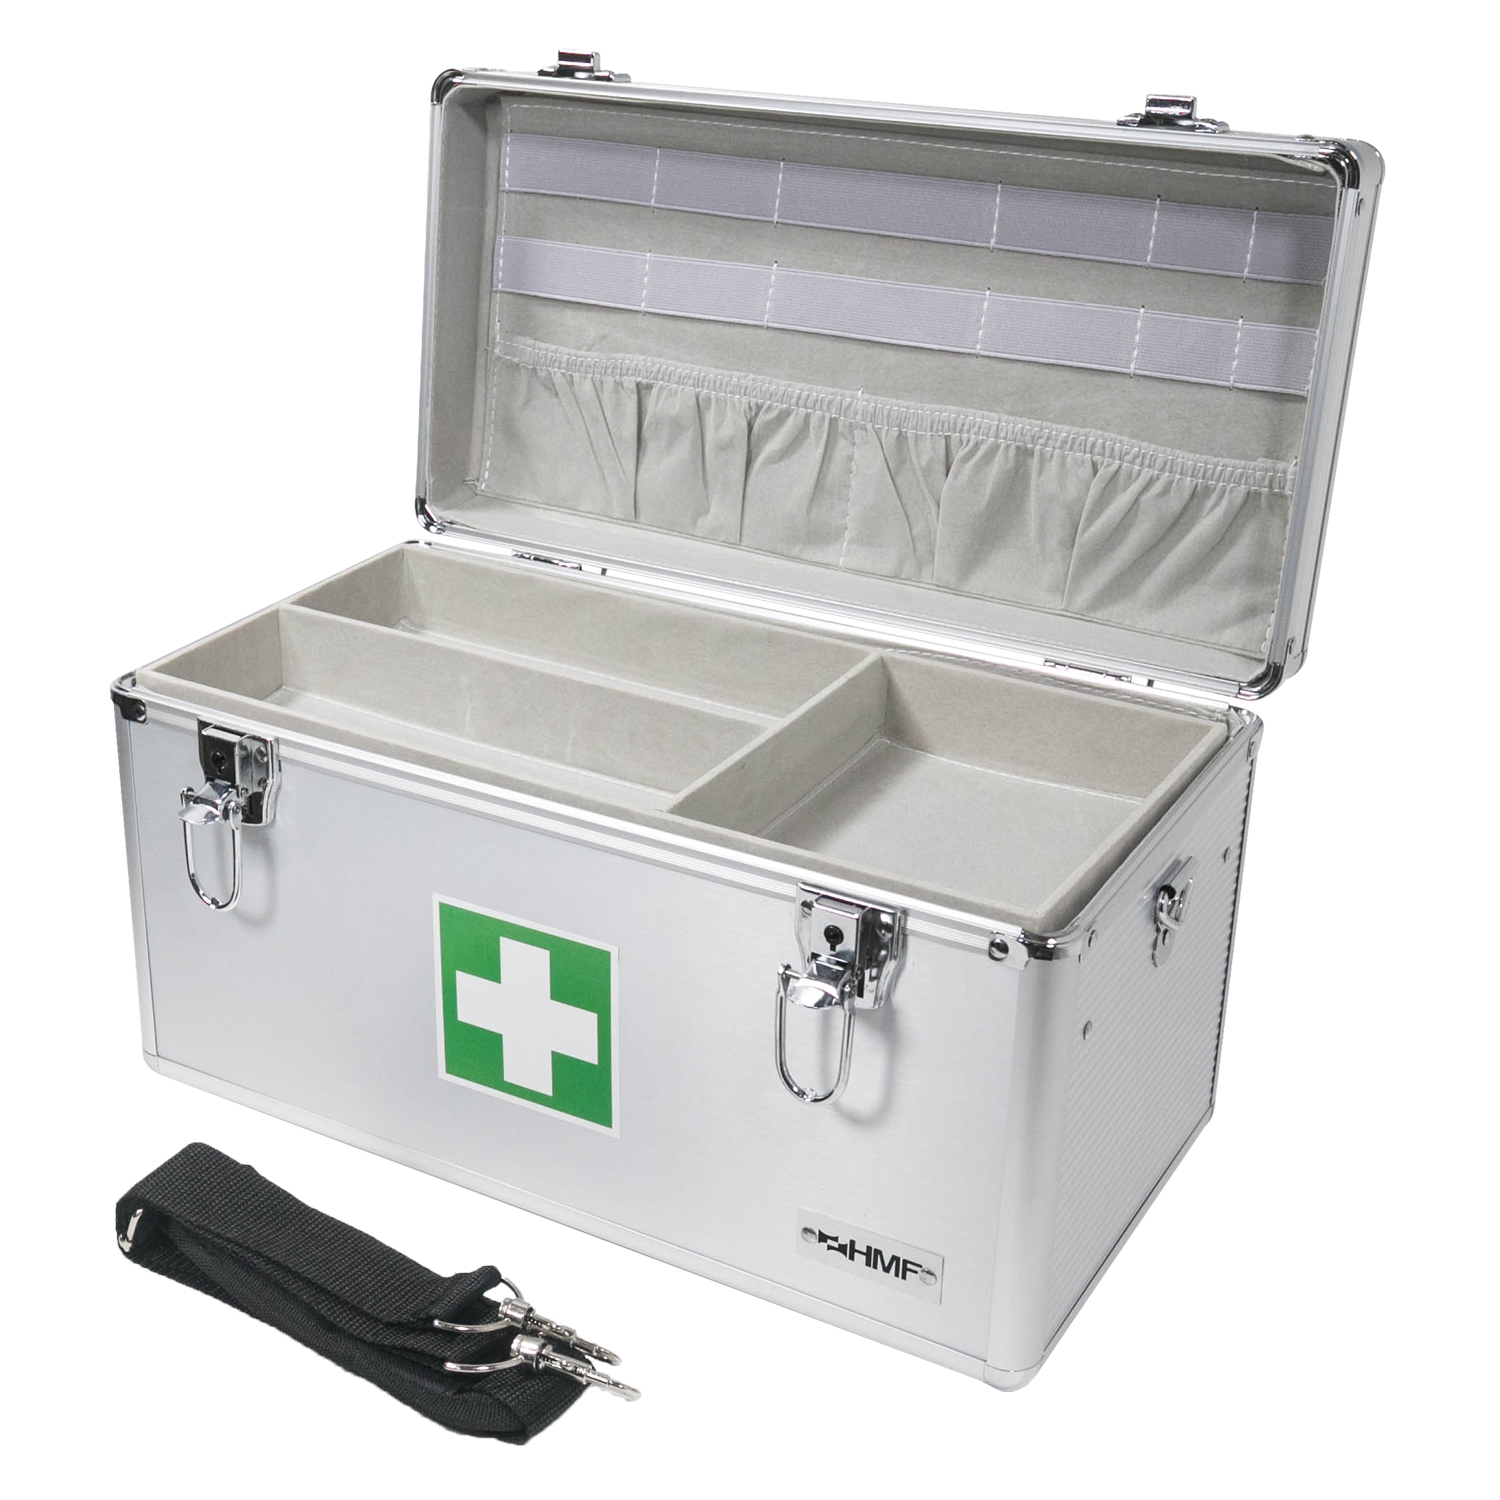 Medizinkoffer, Erste Hilfe Koffer, Aluminium, HMF 14701-09, 40 x 22,5 x 20,5 cm, Silber